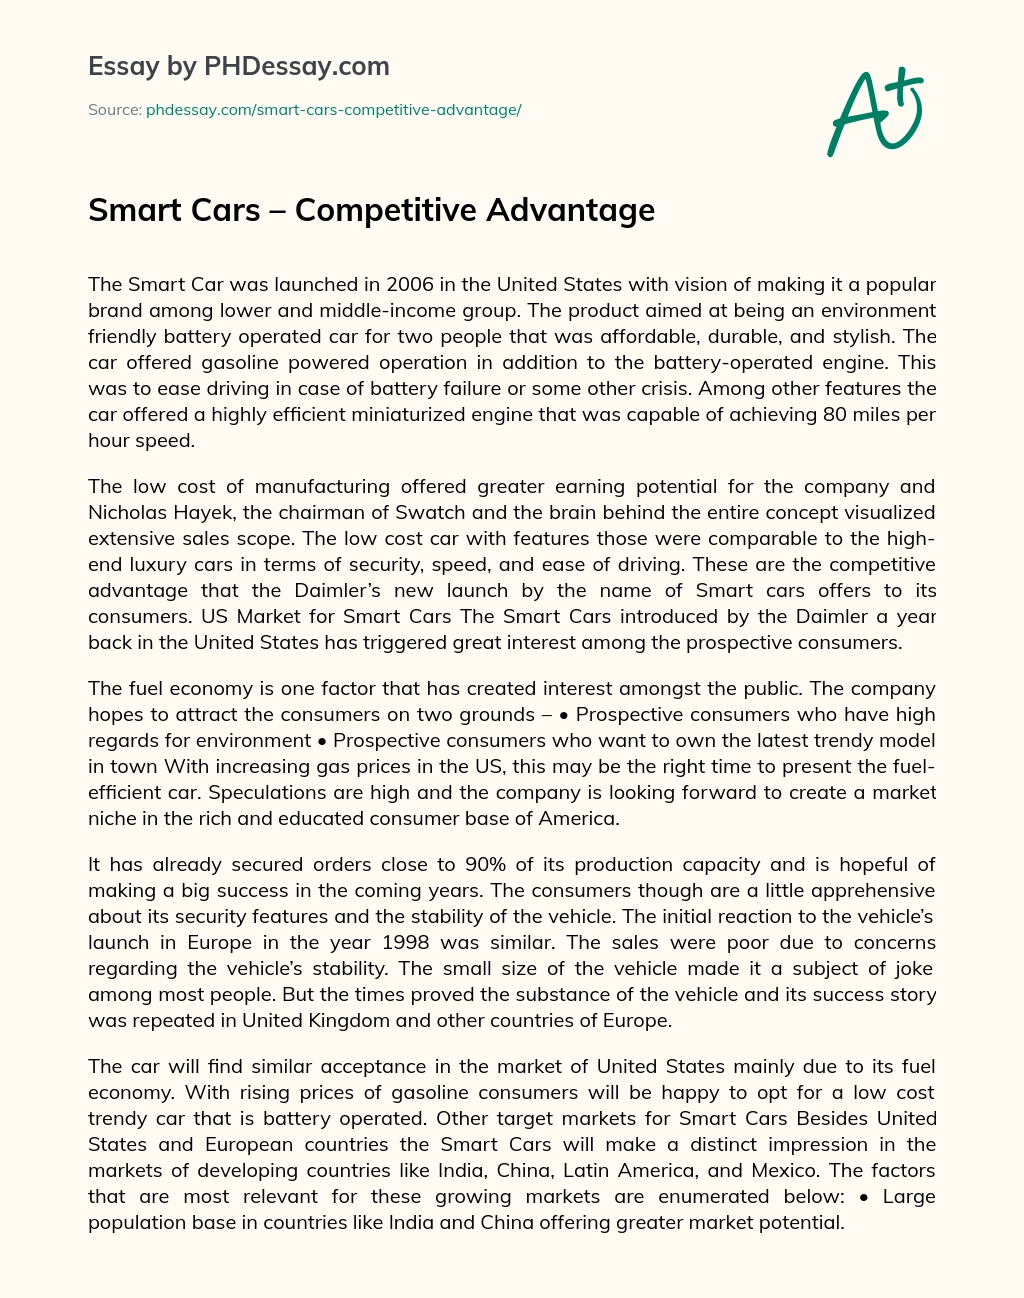 Smart Cars – Competitive Advantage essay